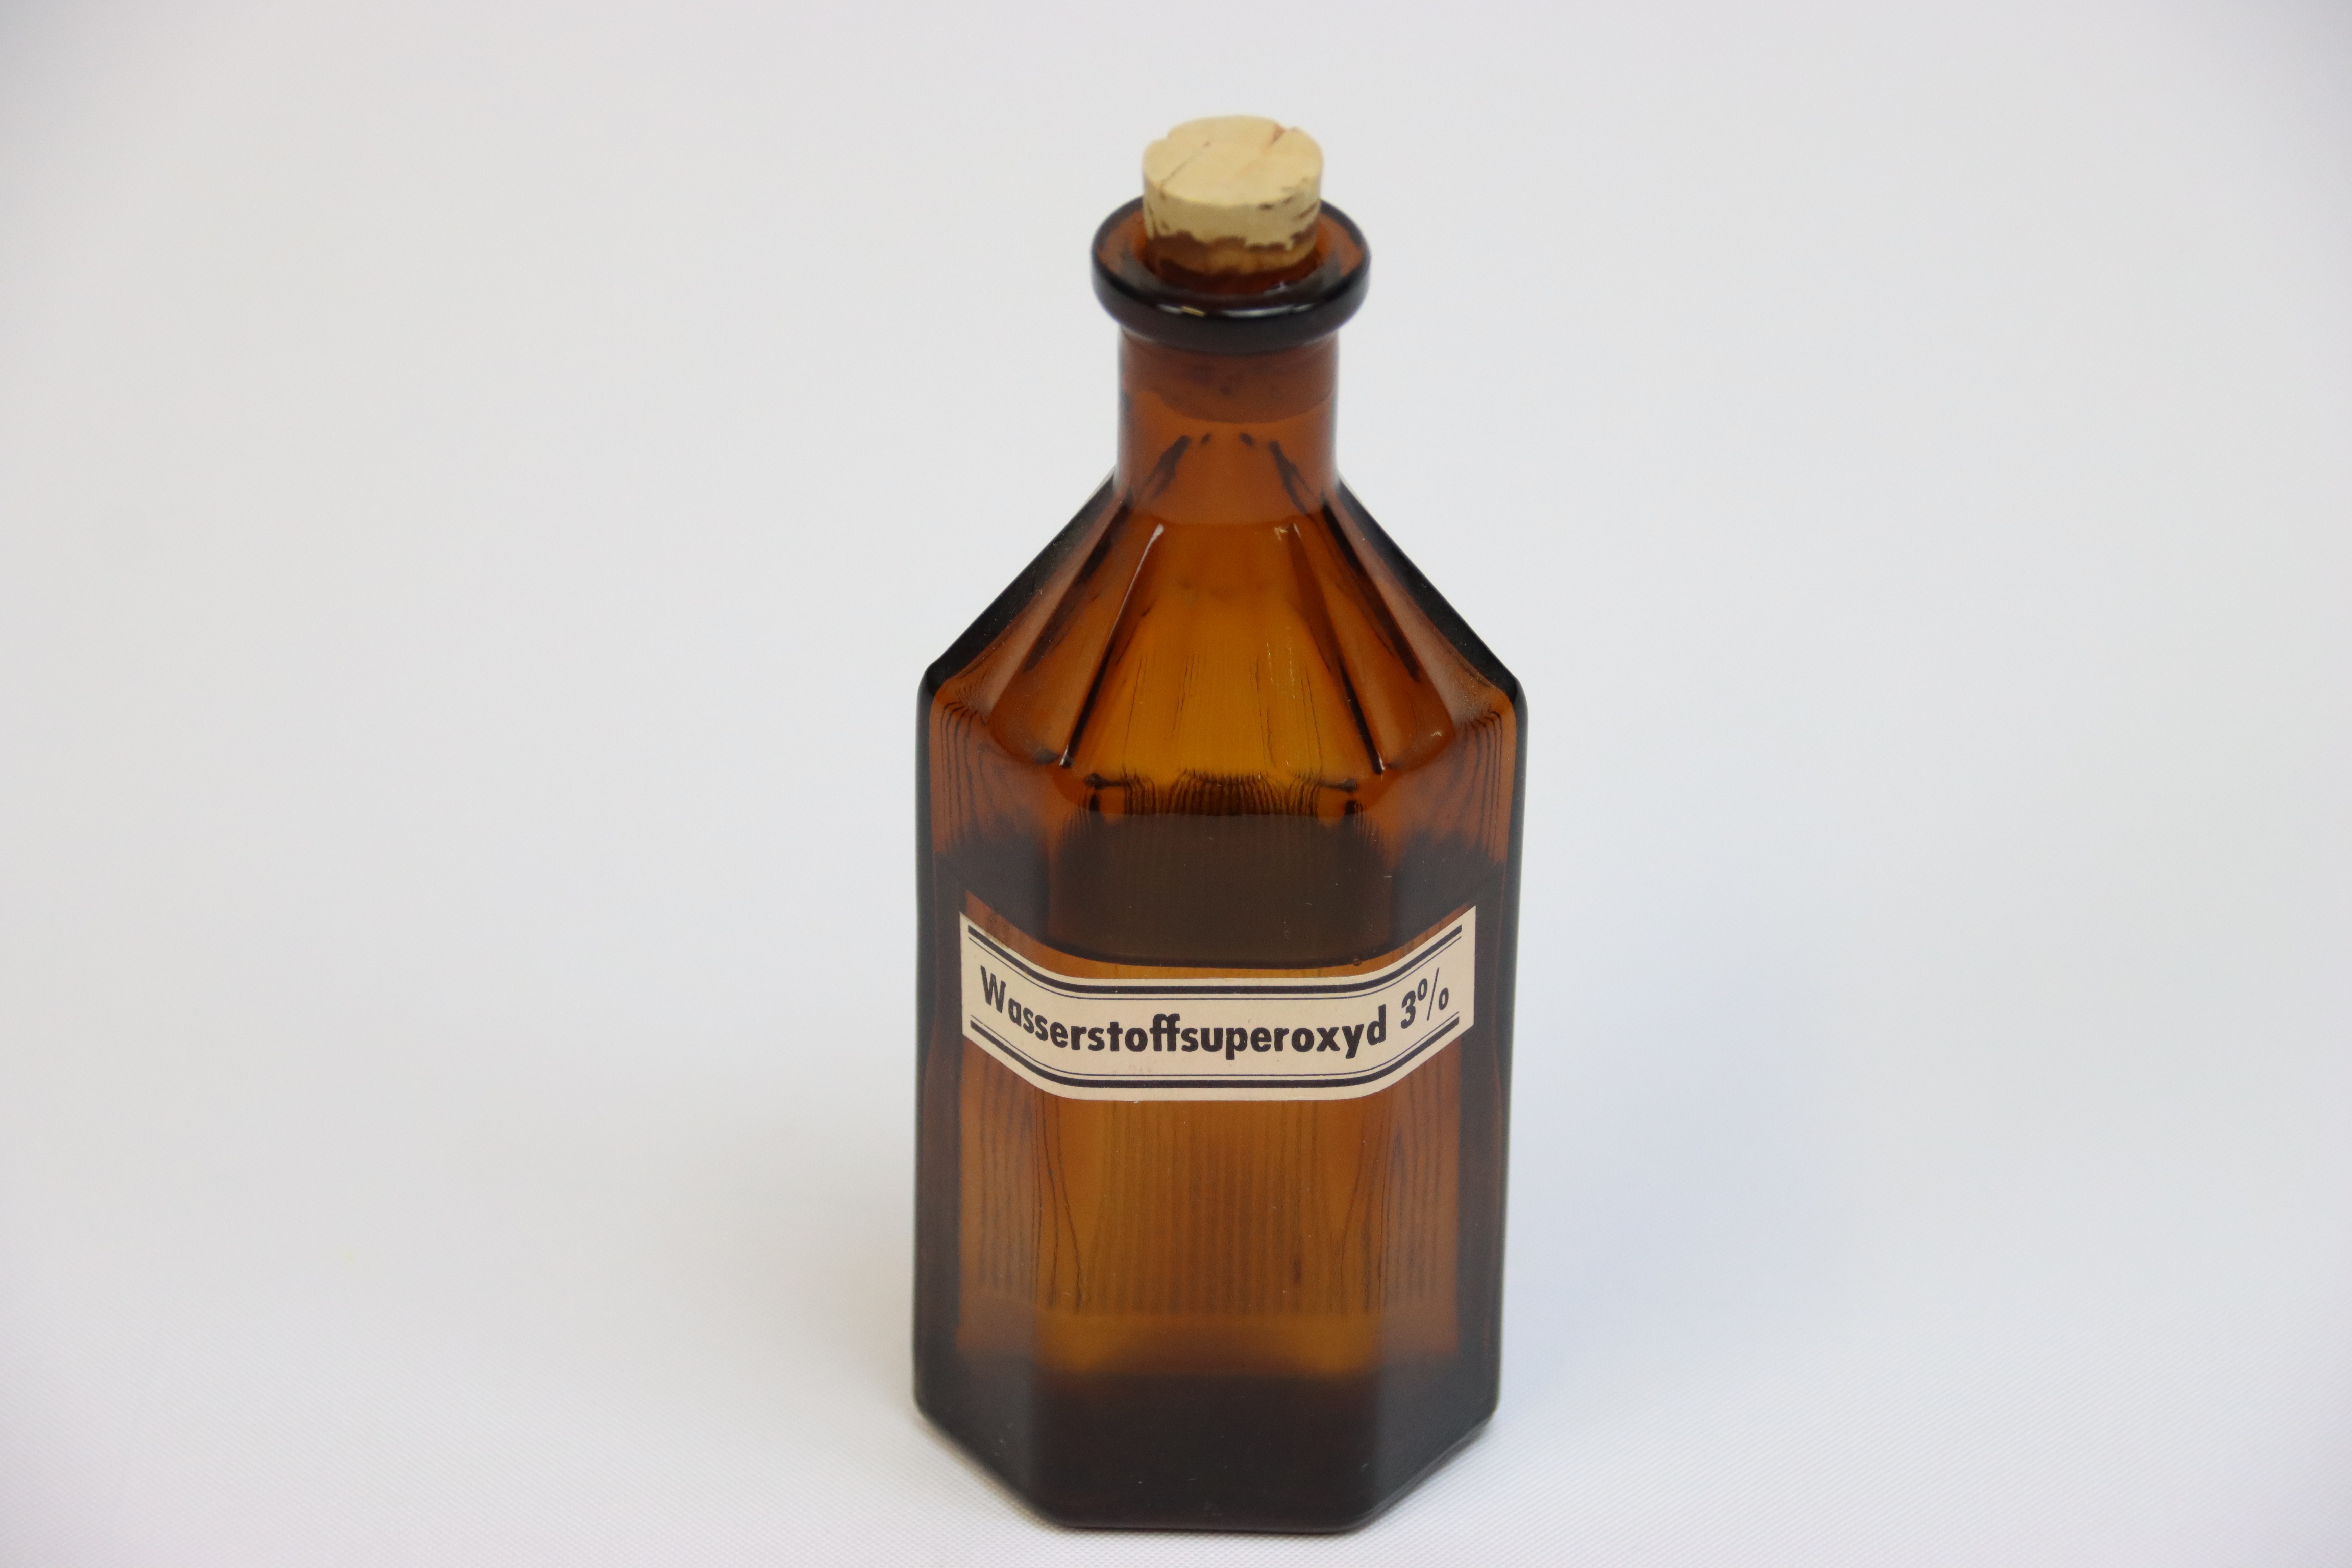 Wasserstoffsuperoxyd 3% Frontalansicht (Krankenhausmuseum Bielefeld e.V. CC BY-NC-SA)